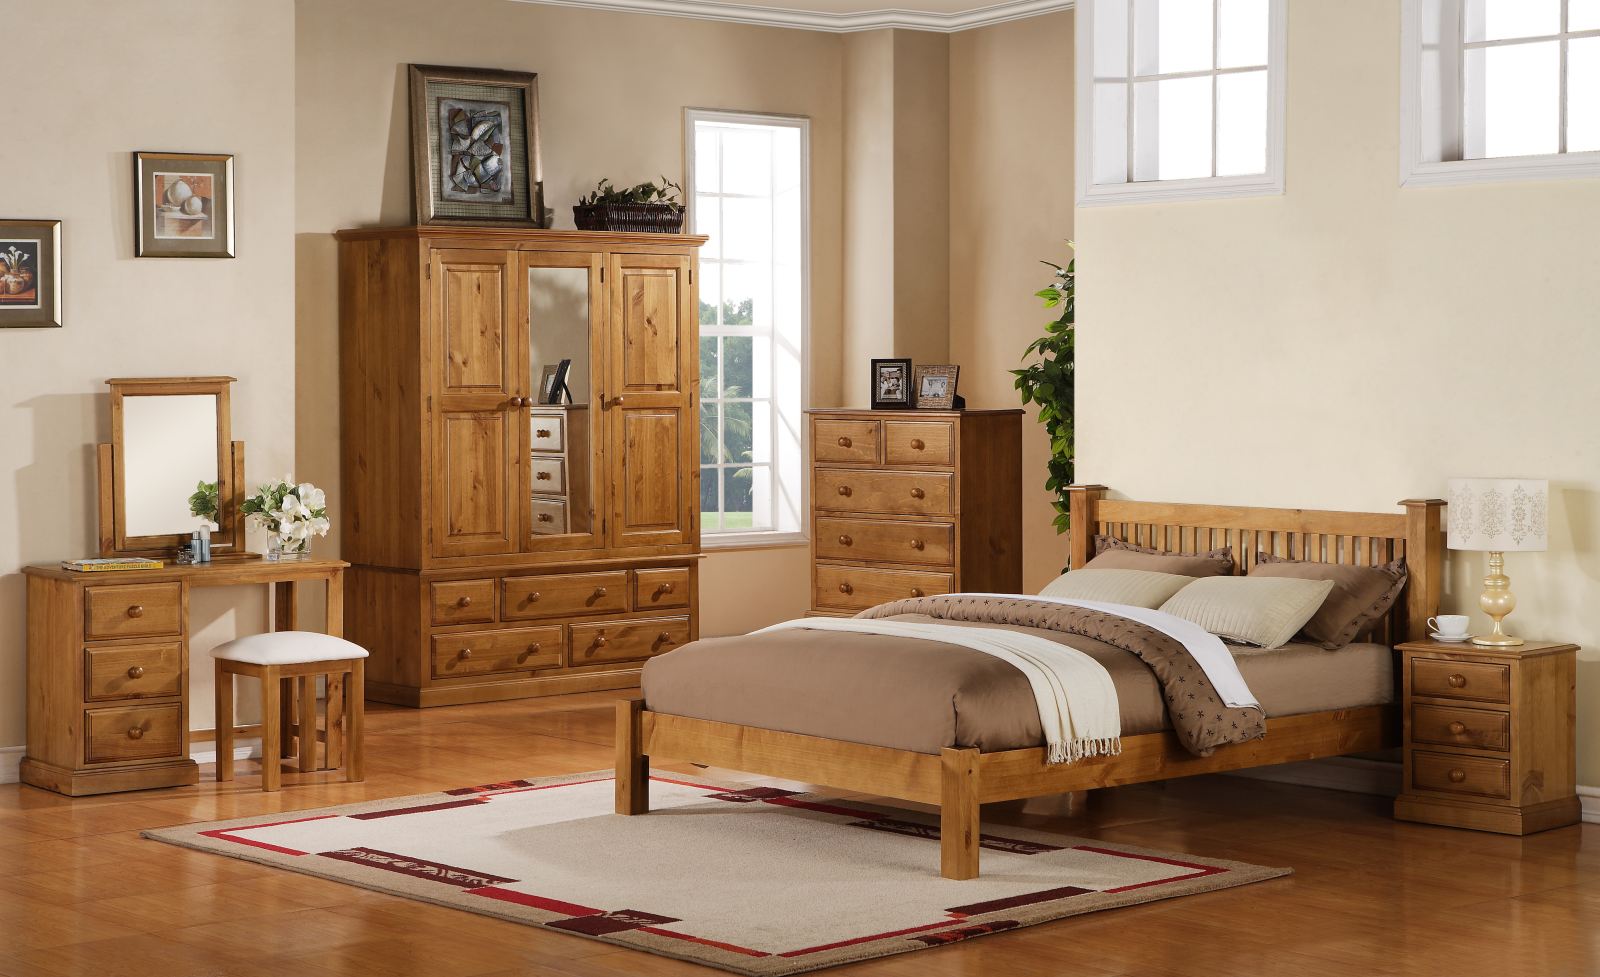 Pine Bedroom Furniture Shopping Tips